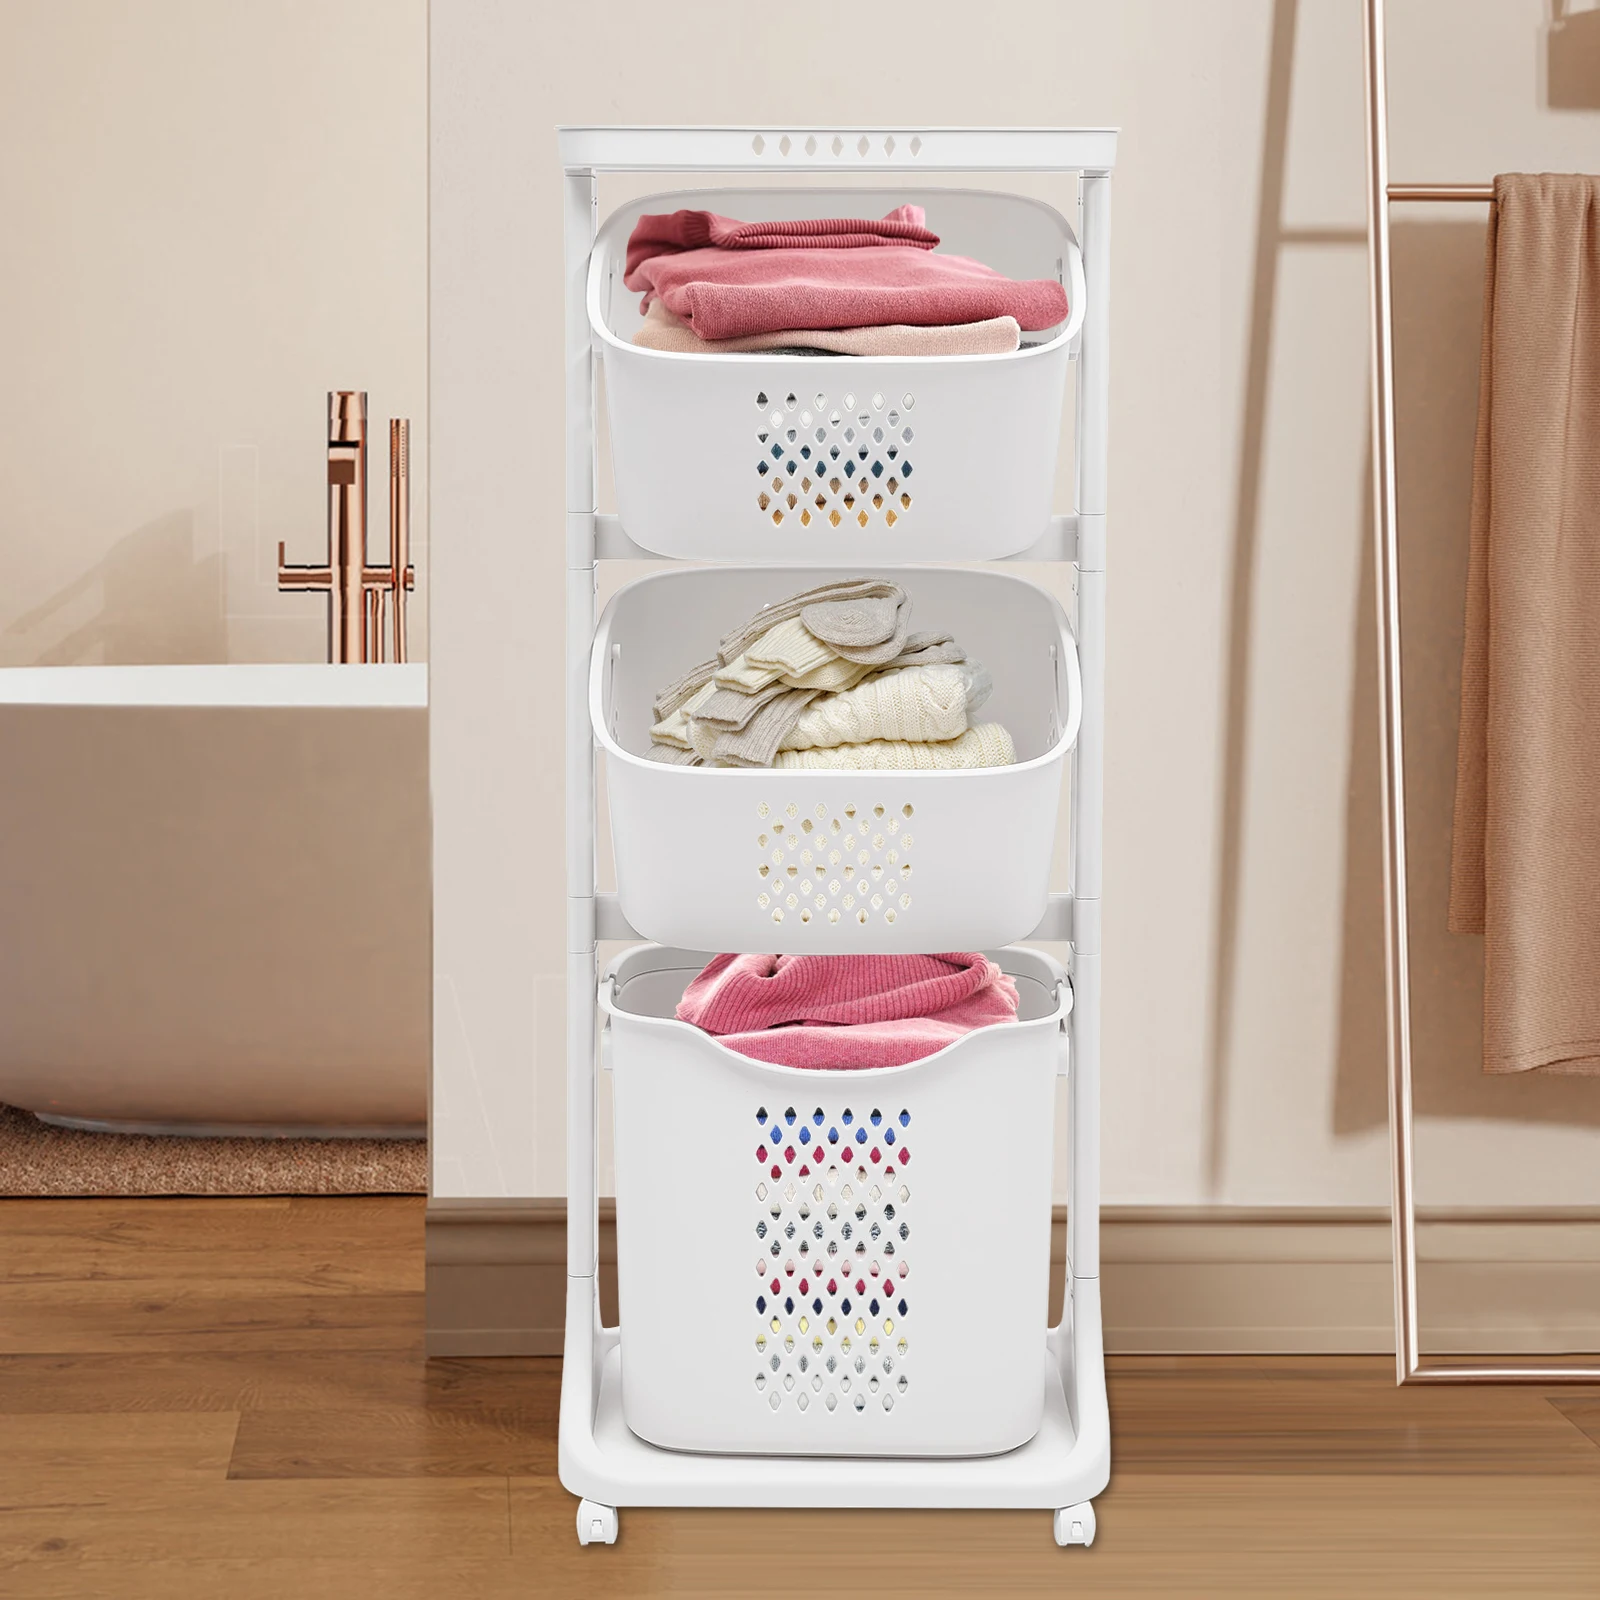 

Laundry Basket Clothes Washing Storage Hamper Bin Wheeled 3 Tier Shelf Rolling Cart Organizer